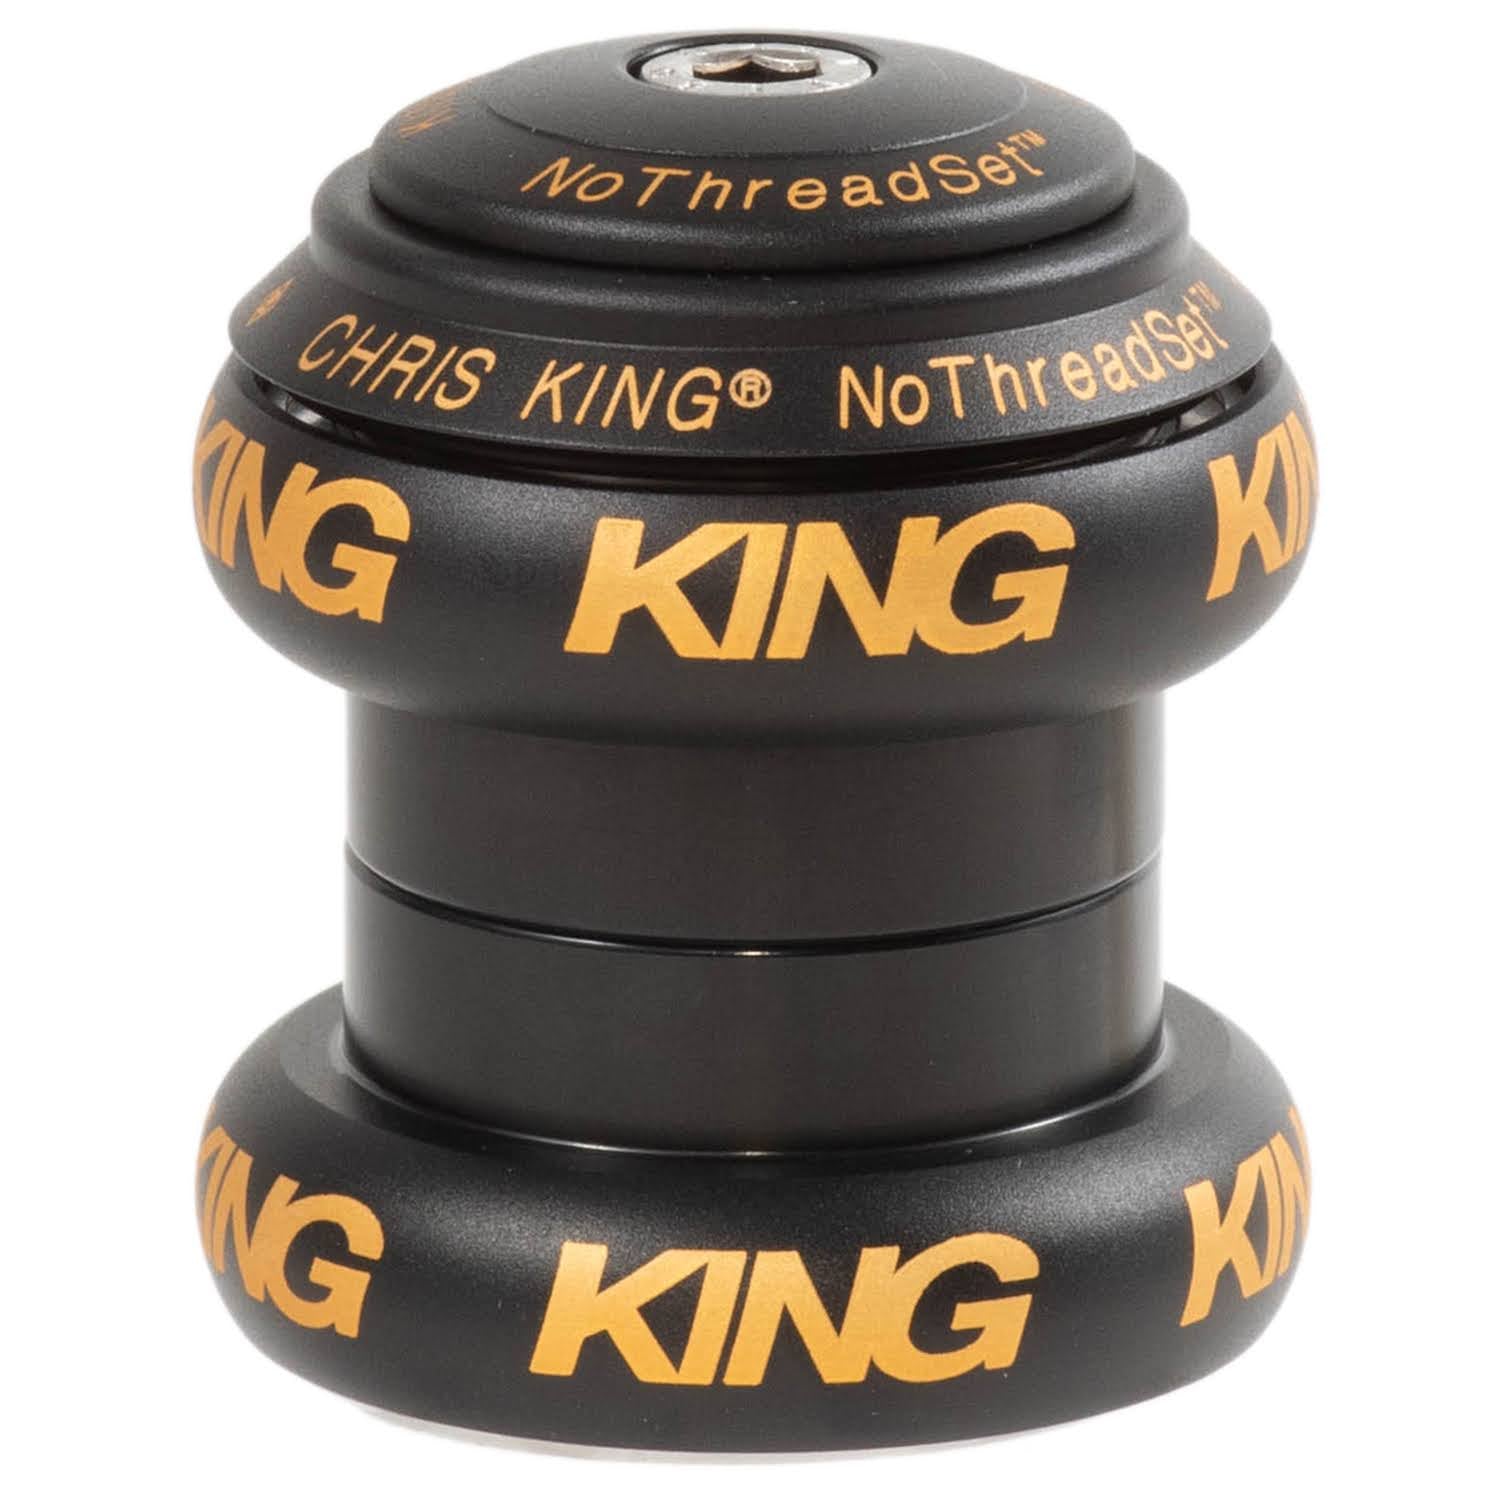 CHRIS KING NoThreadSet Two Tone Black Gold